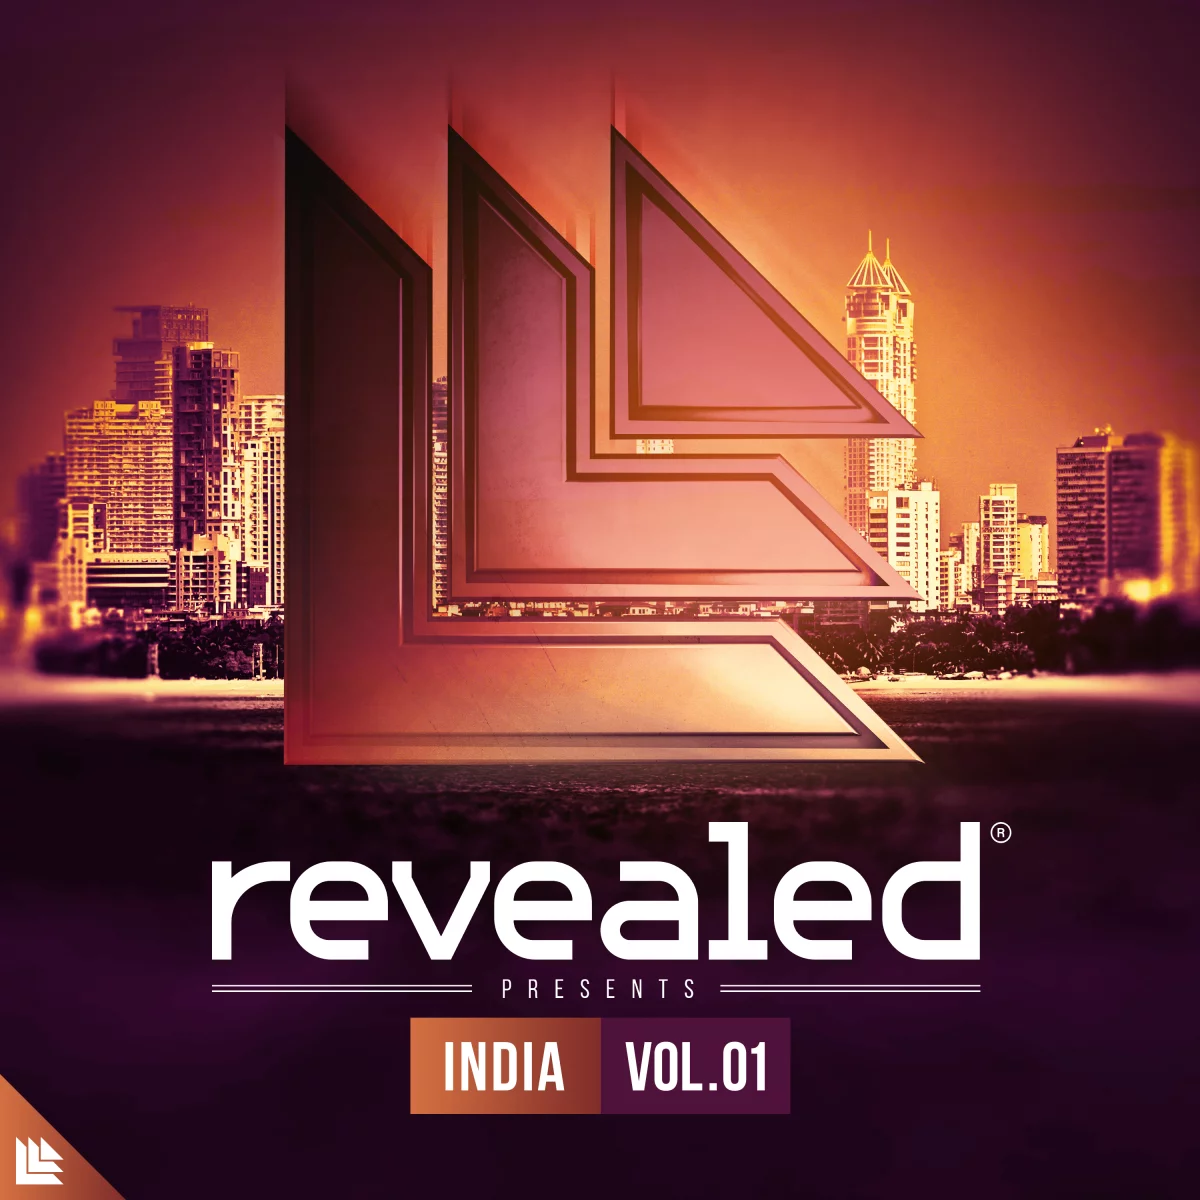 Revealed India Vol. 1 - revealedrec⁠ 